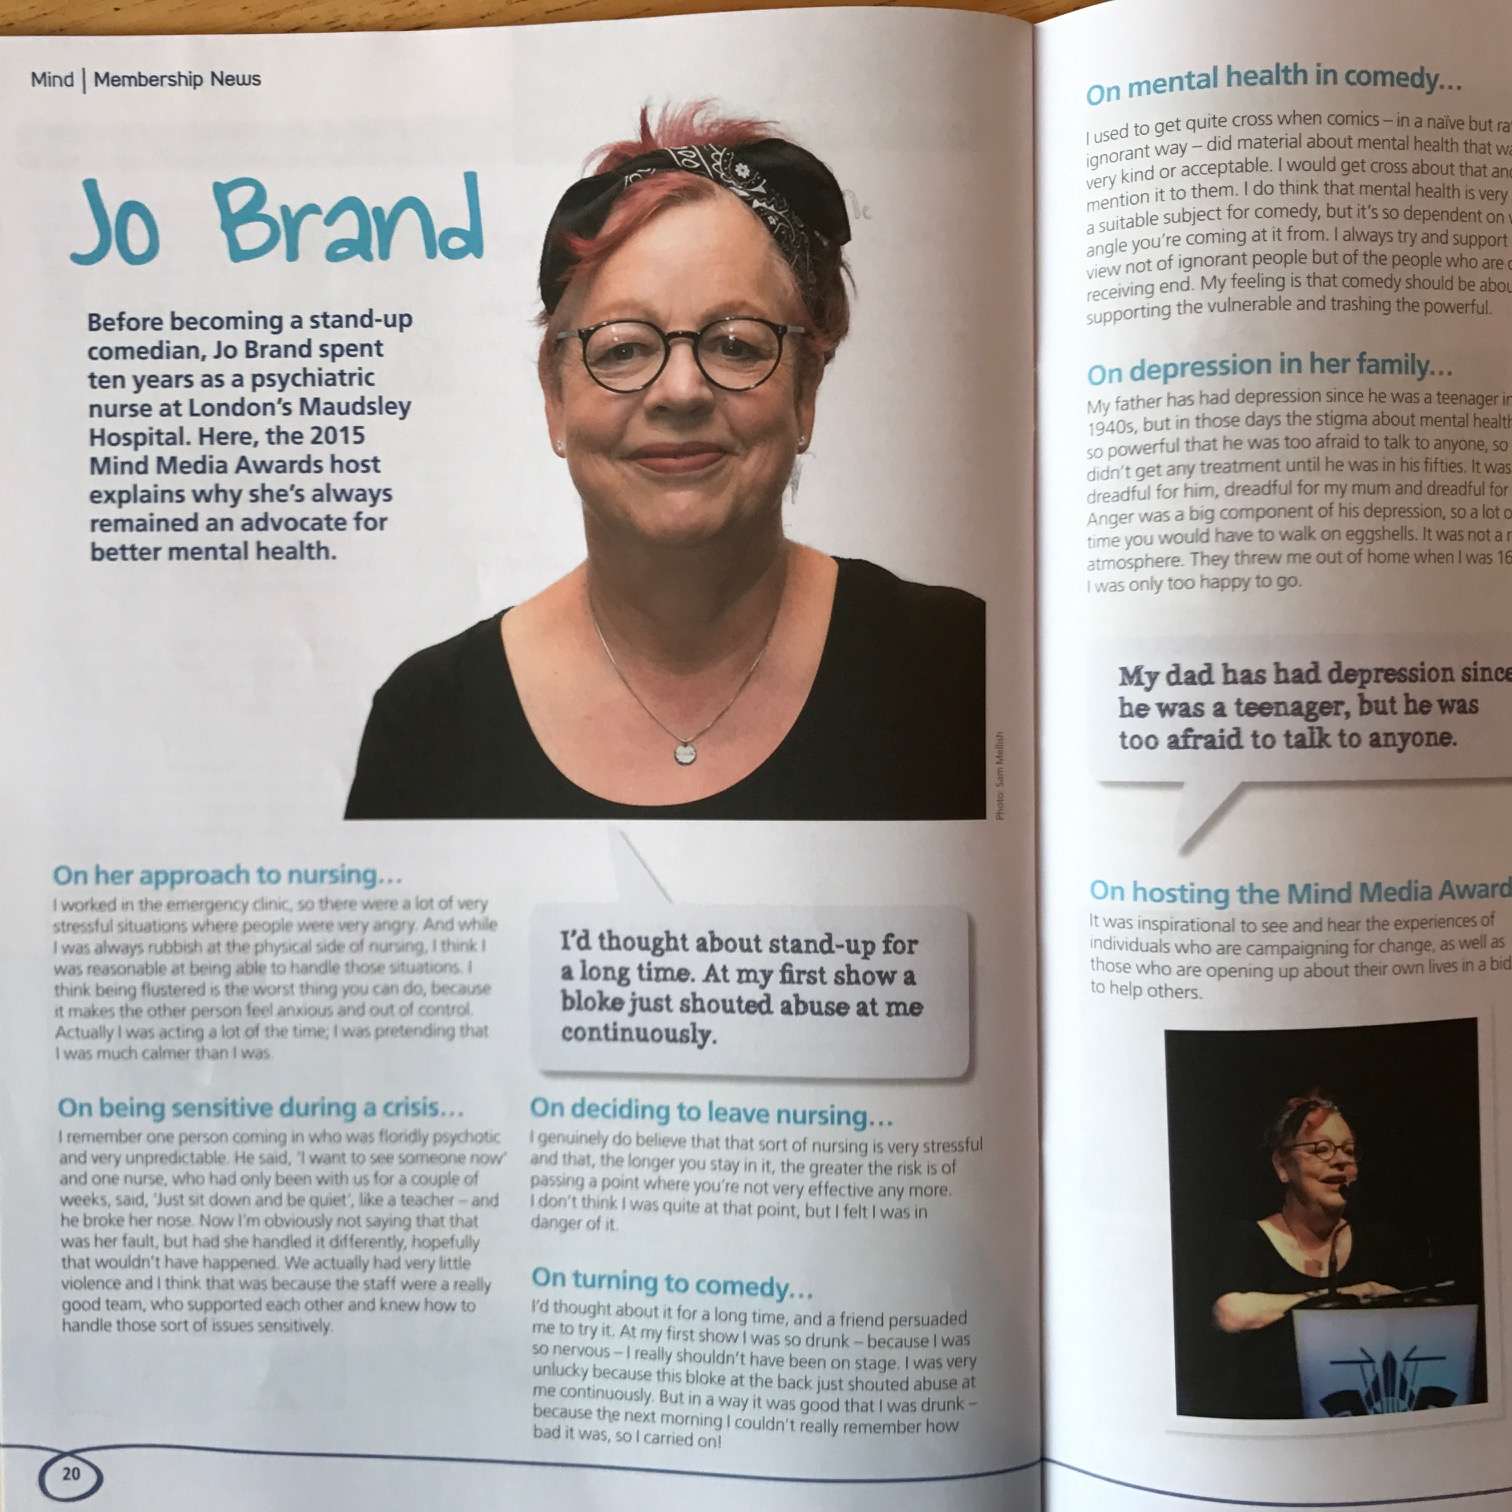 Jo Brand, who worked as a mental health nurse, in Mind Membership News